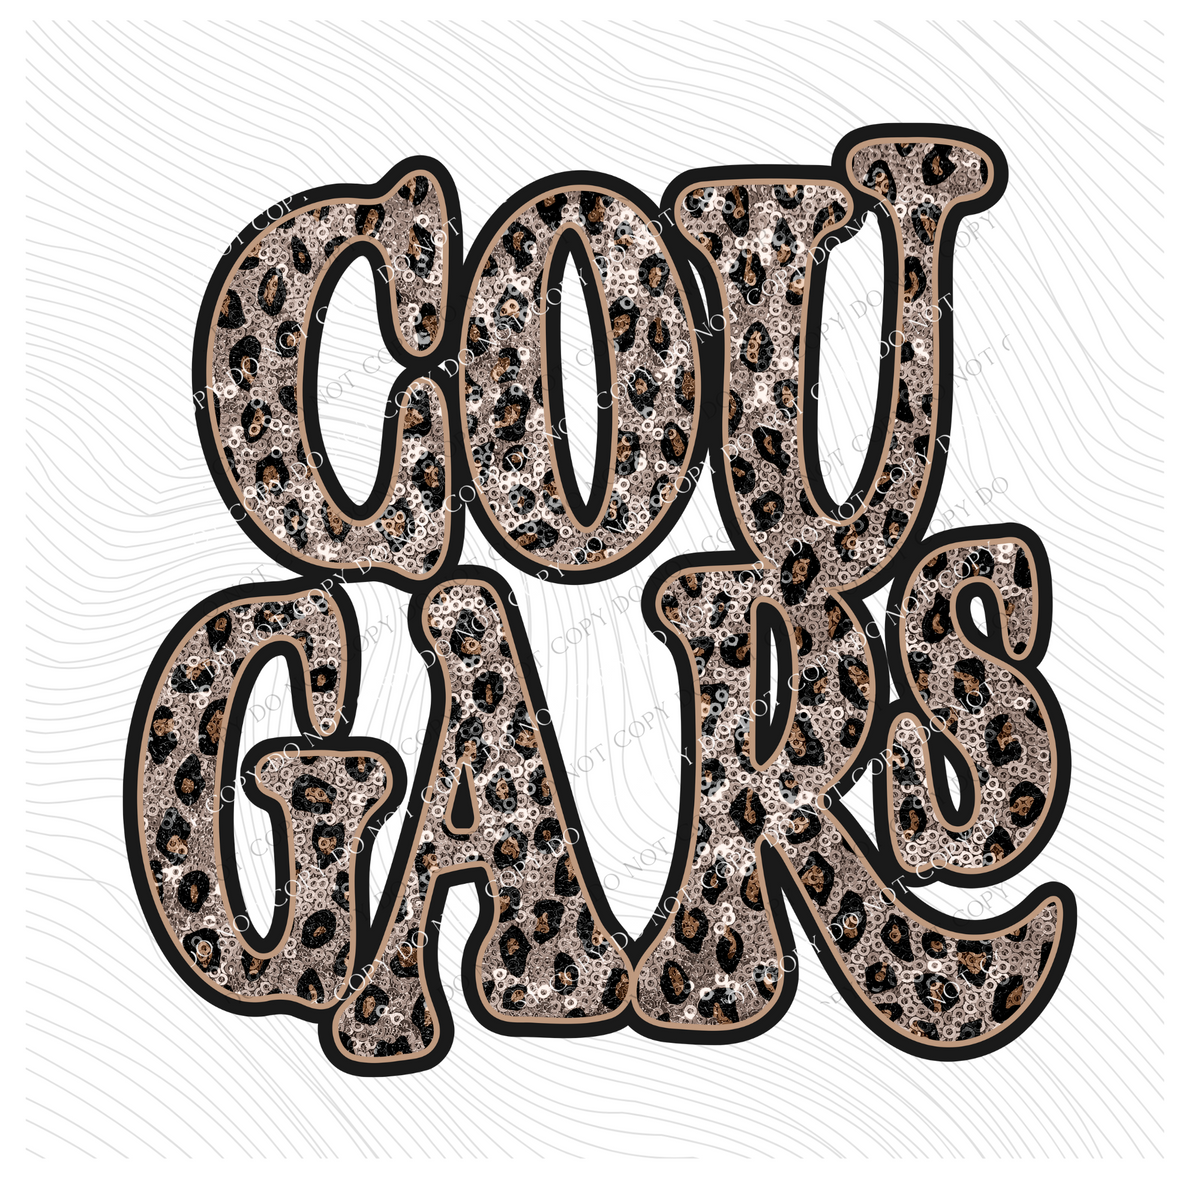 Cougars Vintage Shadow Outline in Faux Sequin Leopard Digital Design, PNG Only